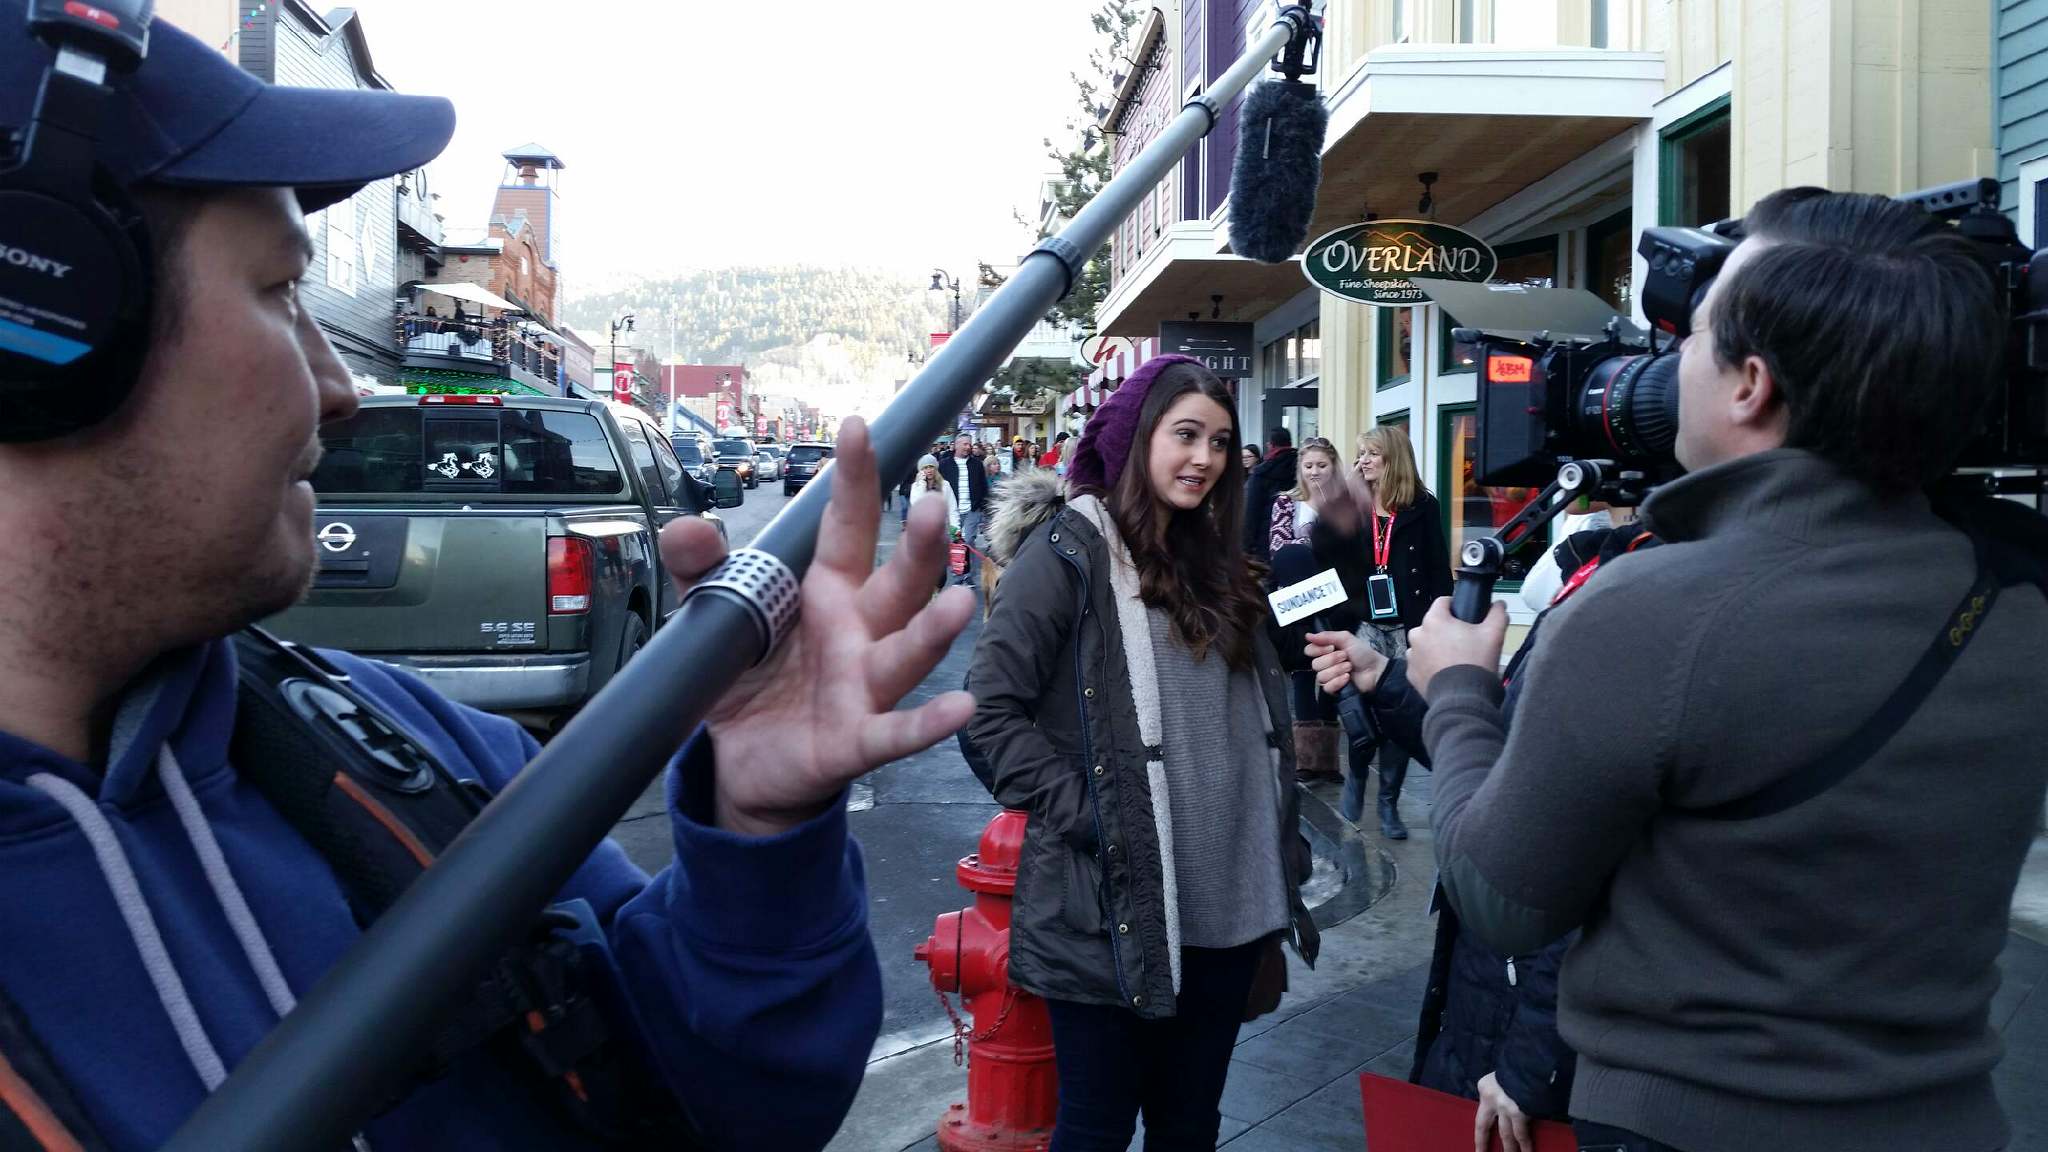 Courtney Baxter, Sundance 2015, Interview for Sundance TV, January 25, 2015